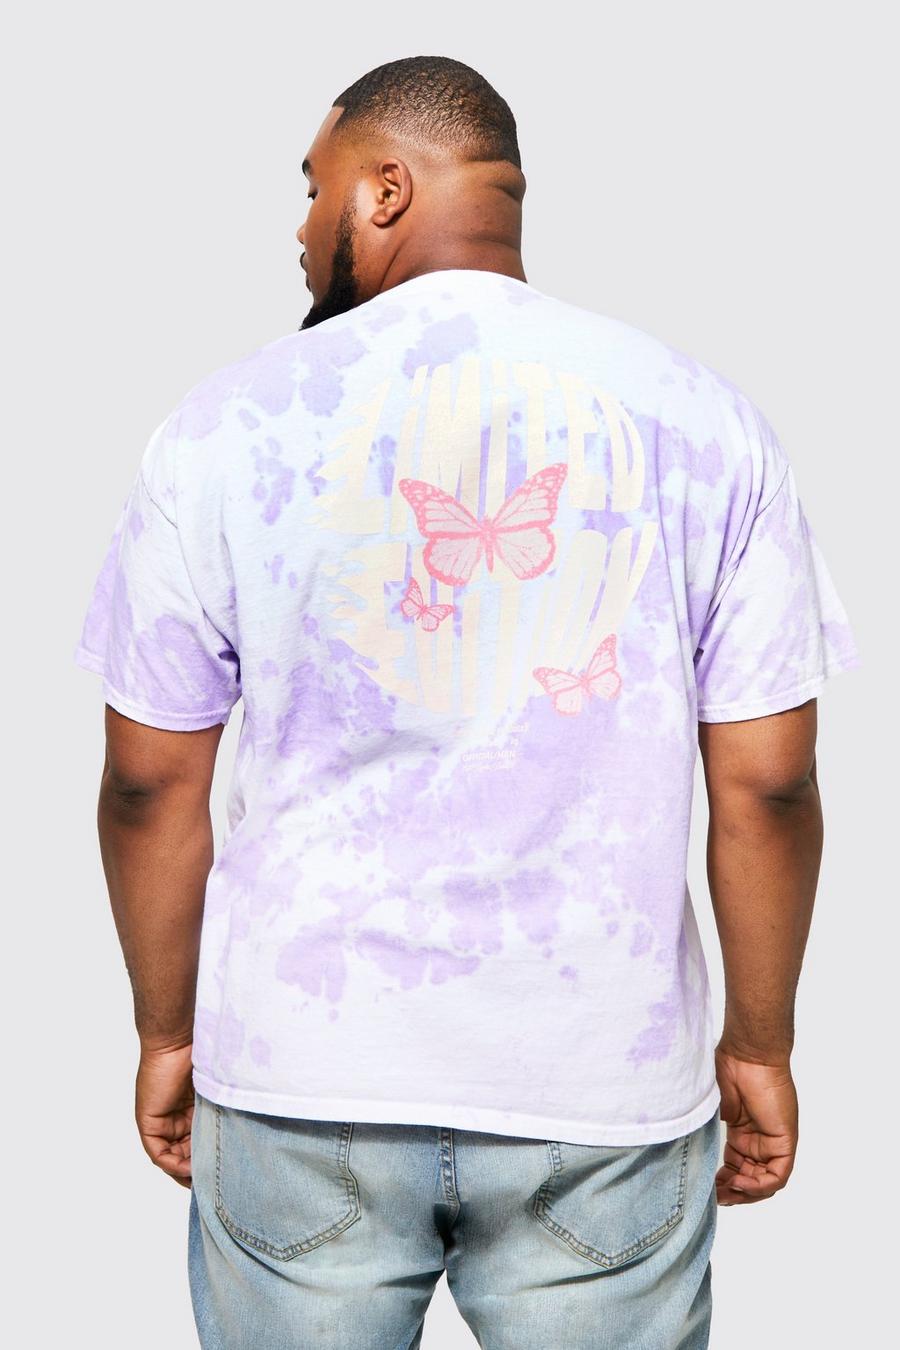 T-shirt Plus Size Limited in fantasia tie dye con farfalle, Lilac viola